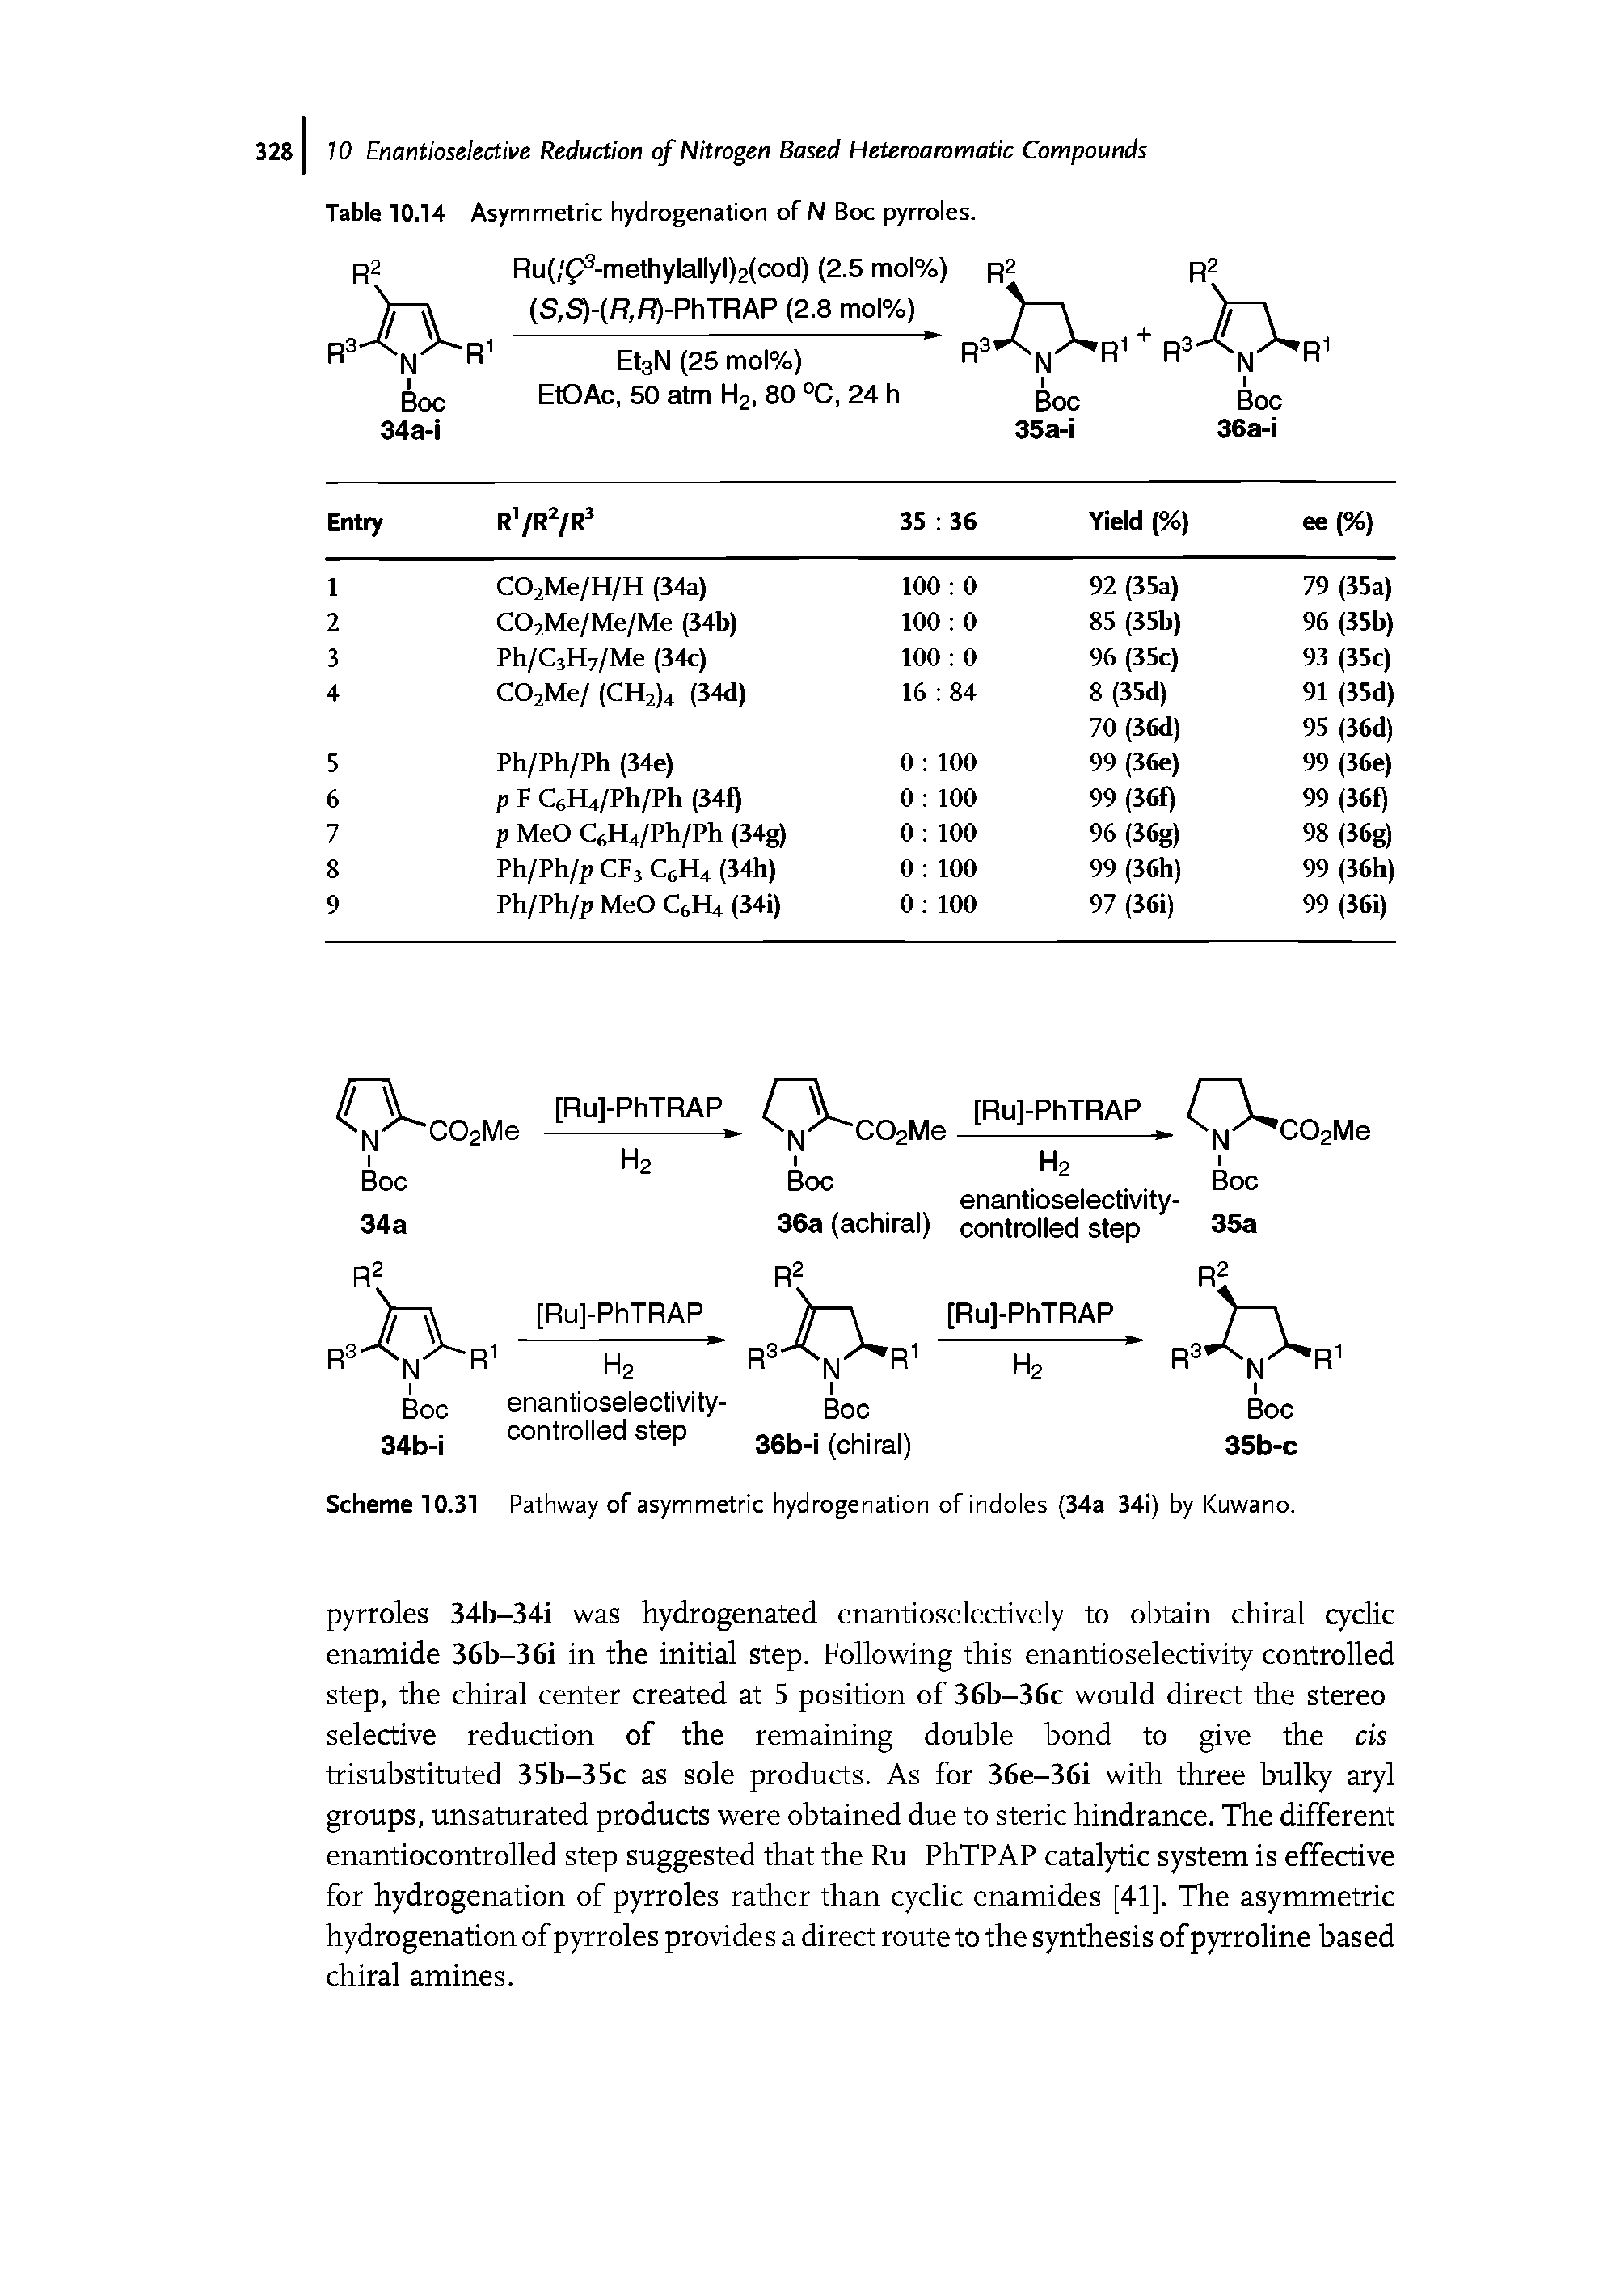 Scheme 10.31 Pathway of asymmetric hydrogenation of indoles (34a 34i) by Kuwano.